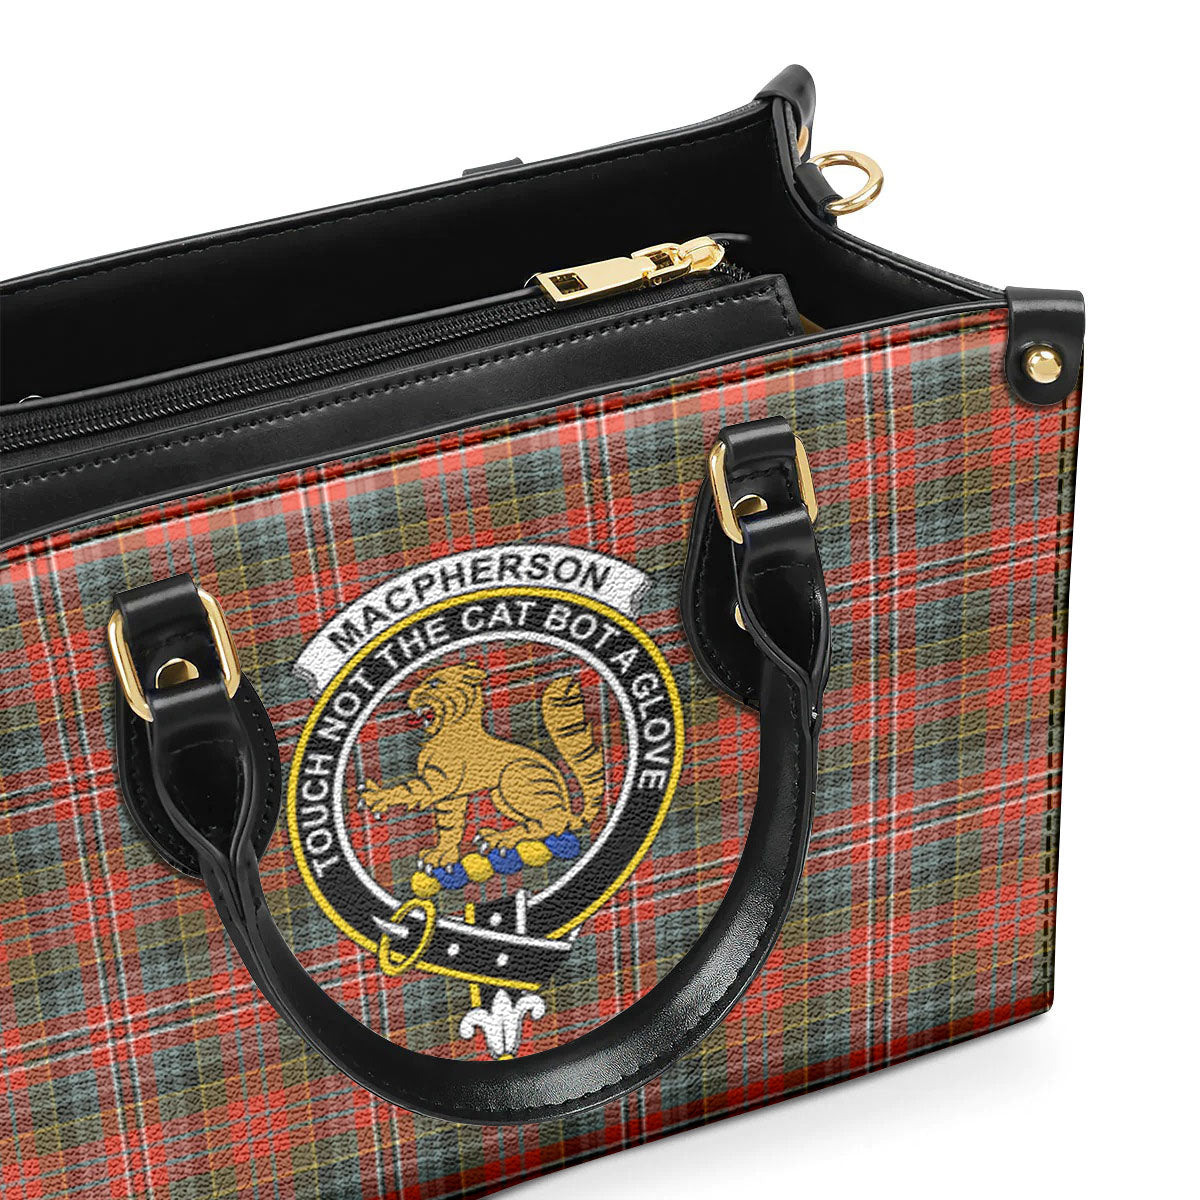 MacPherson Weathered Tartan Crest Leather Handbag